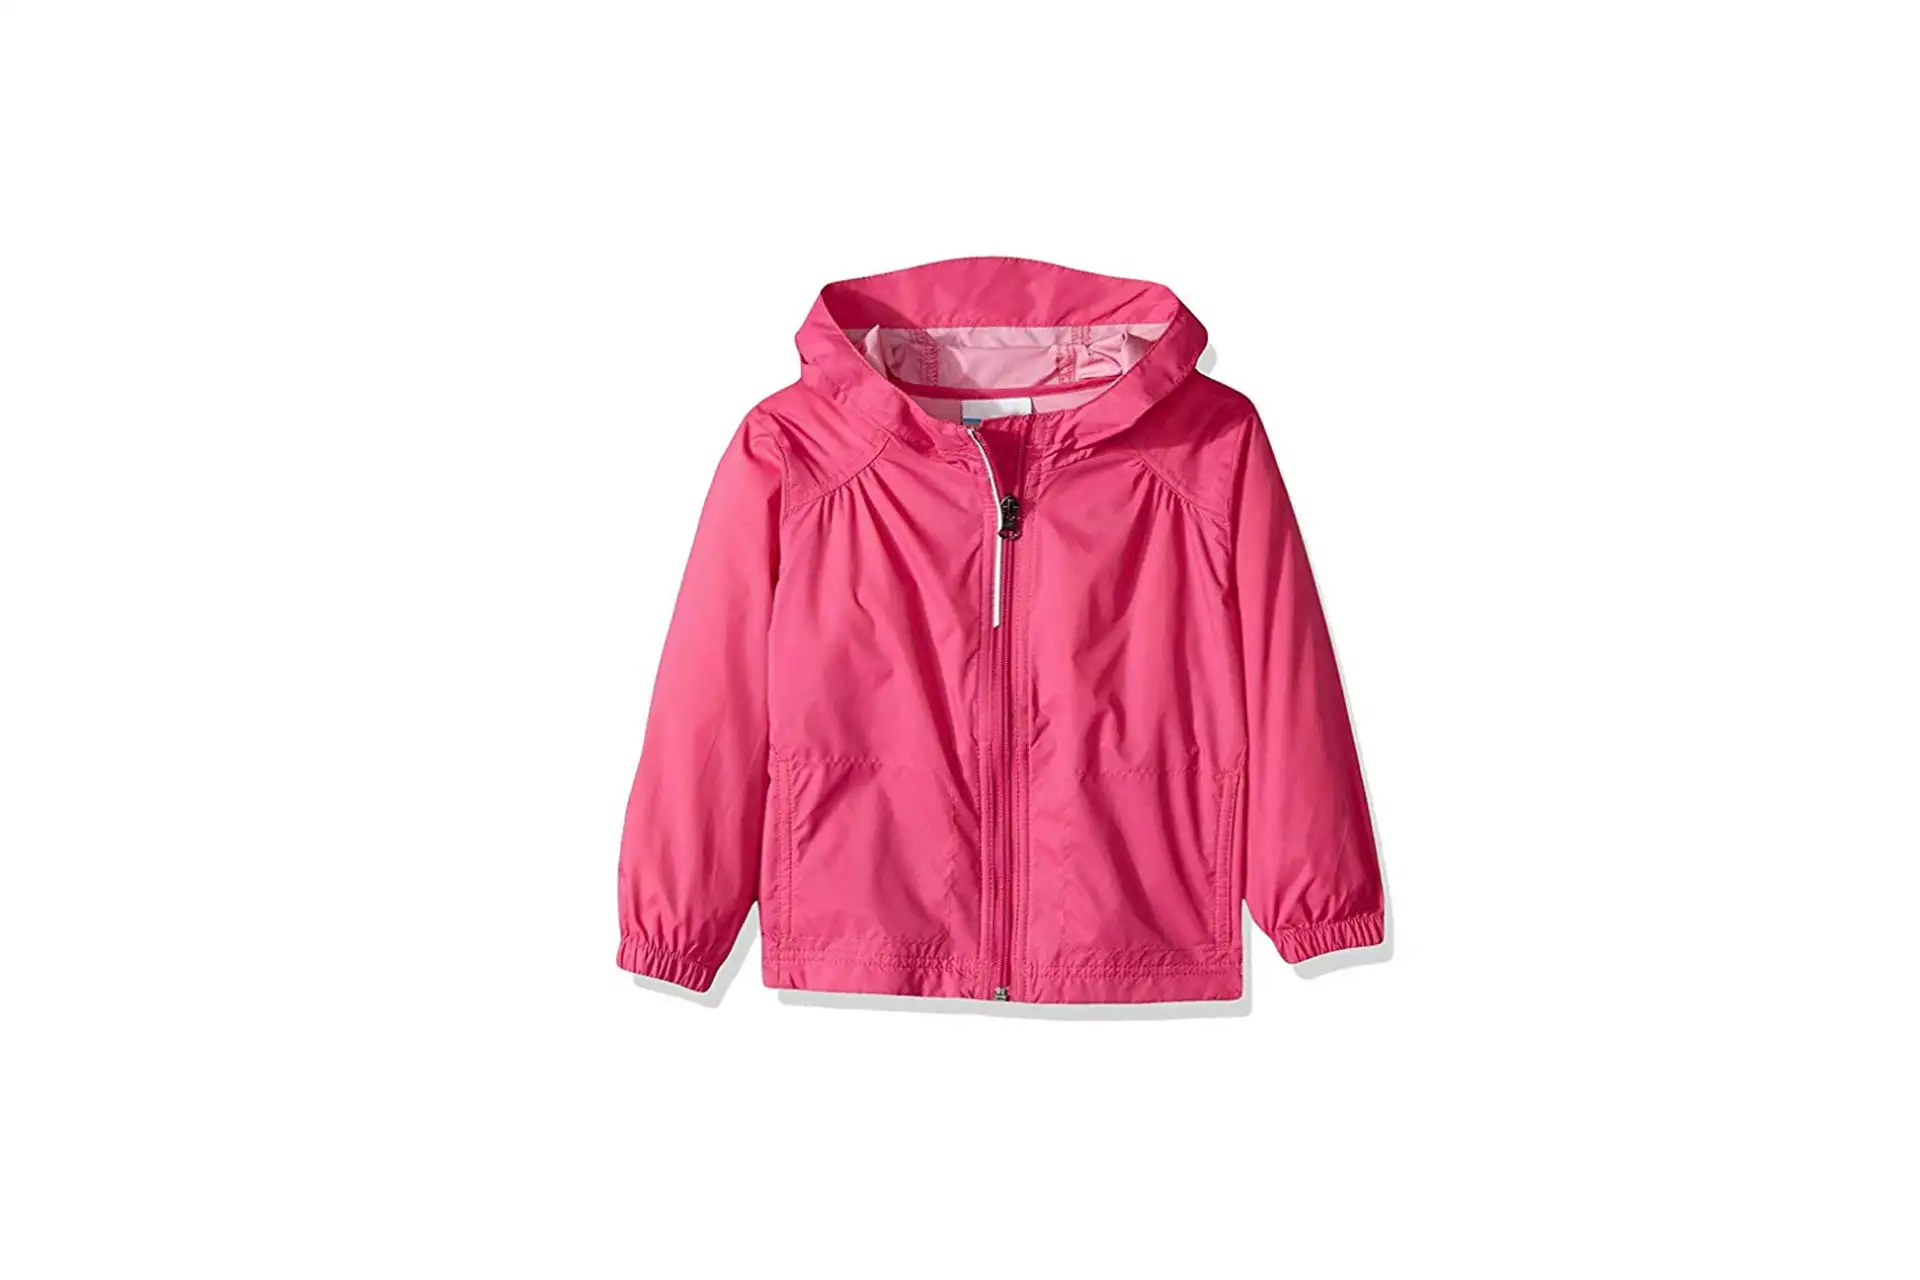 Pink Windbreaker Jacket for Kids; Courtesy of Amazon